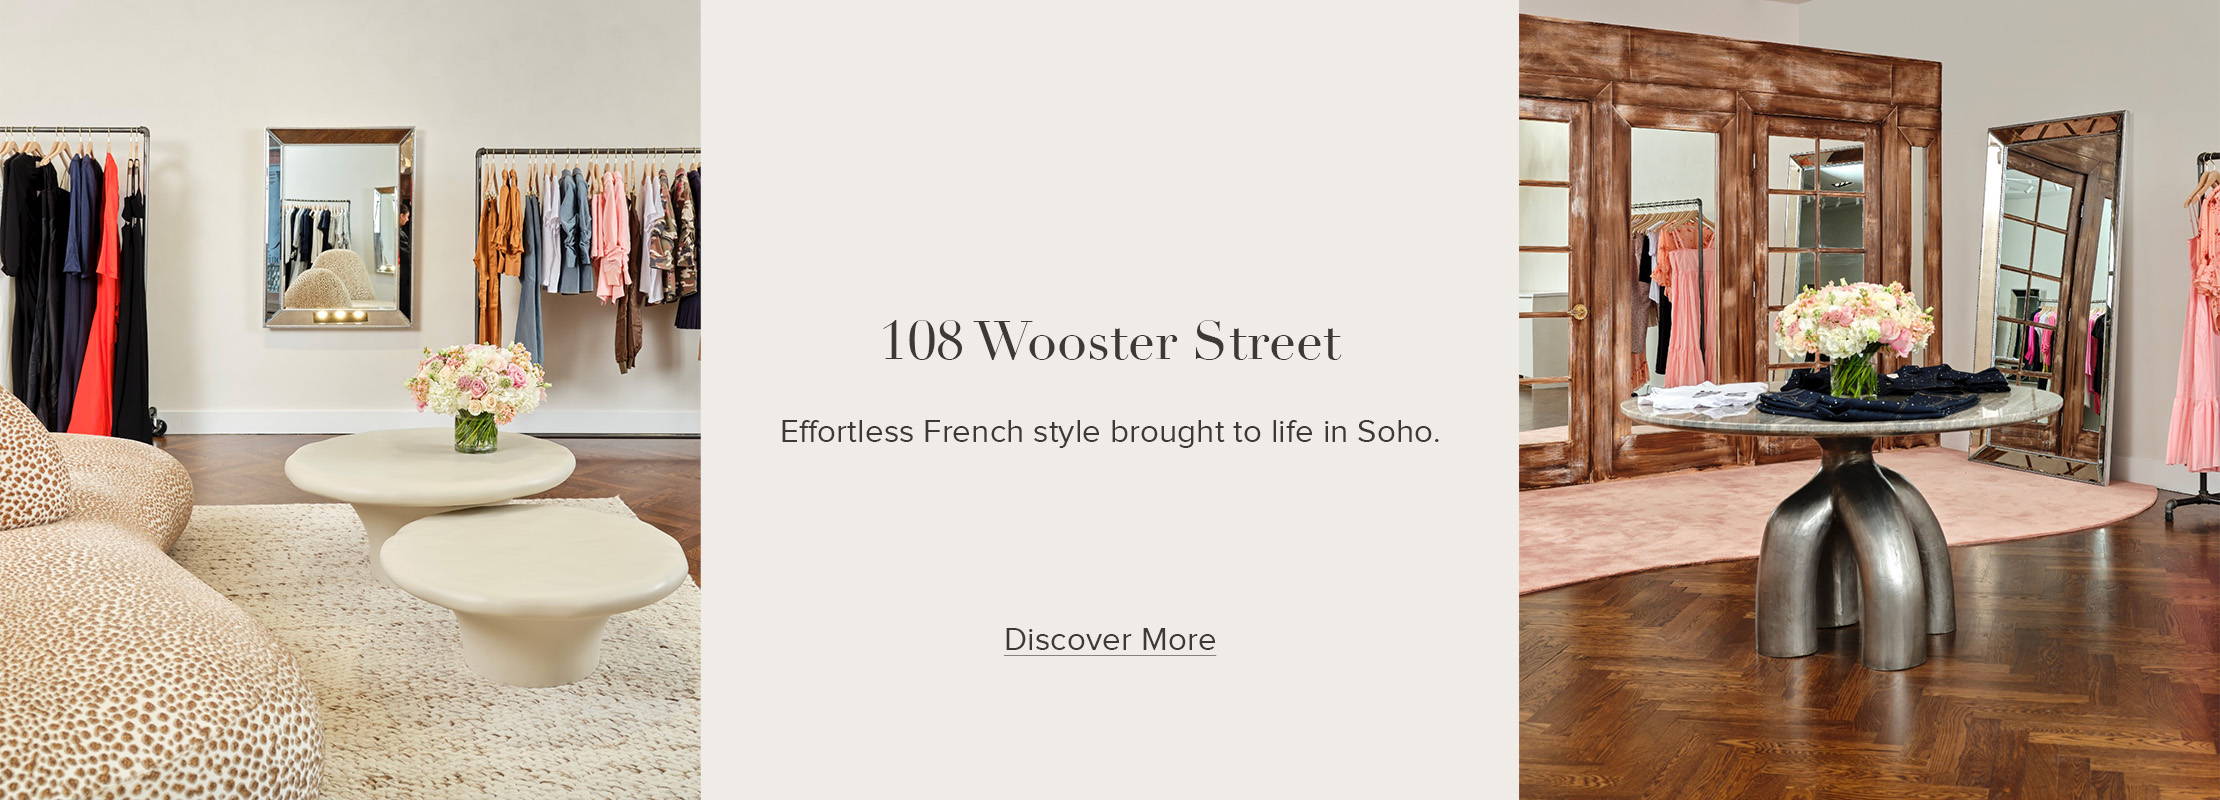 108 Wooster Street is now open